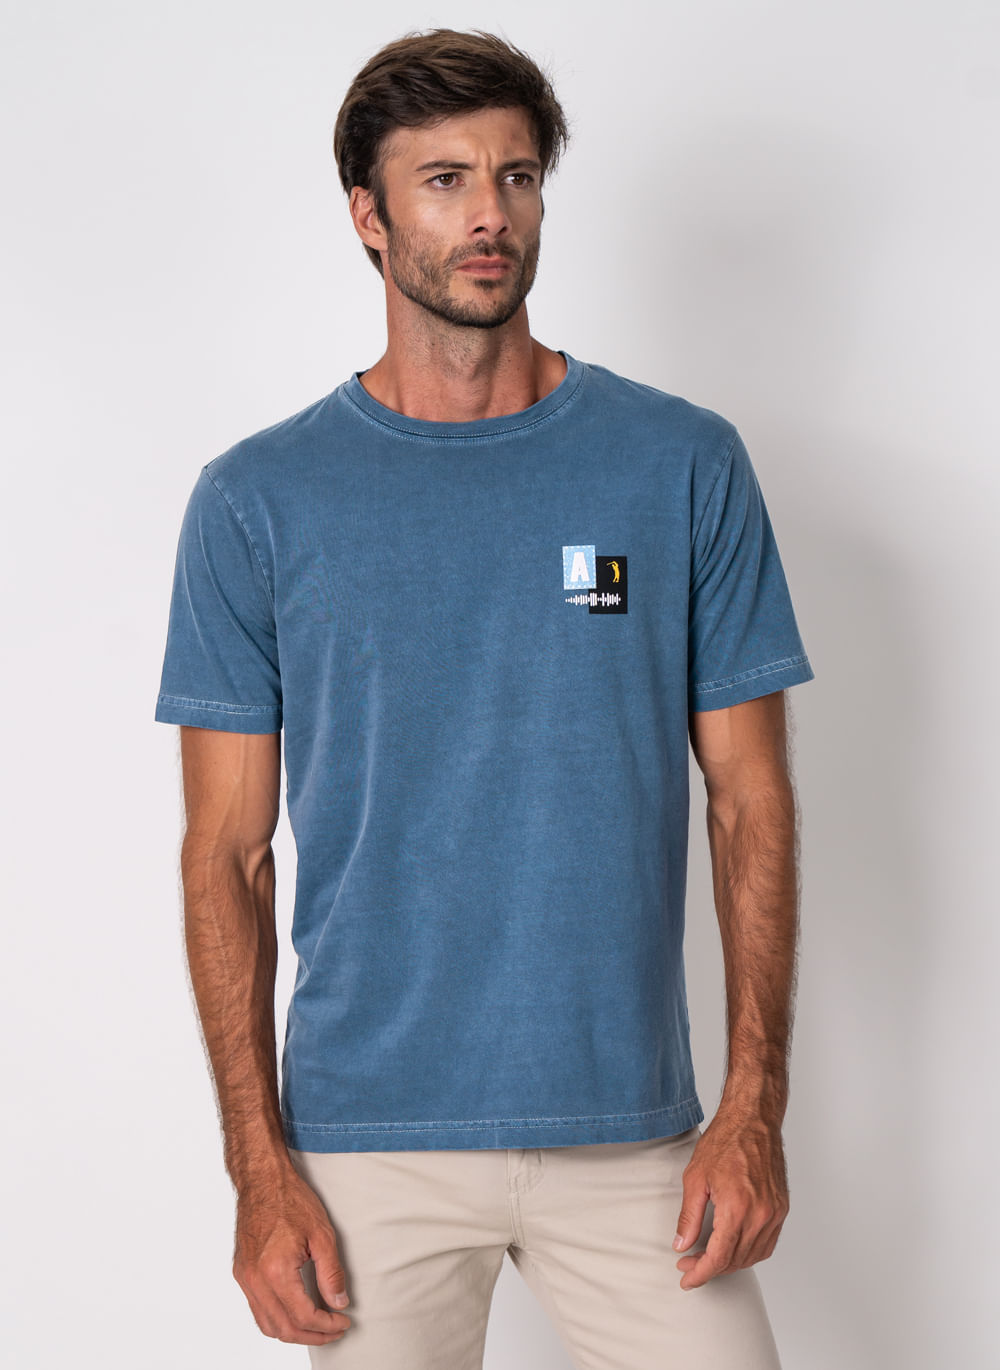 Camiseta-Estampada-Aleatory-Stone-Azul-Azul-P